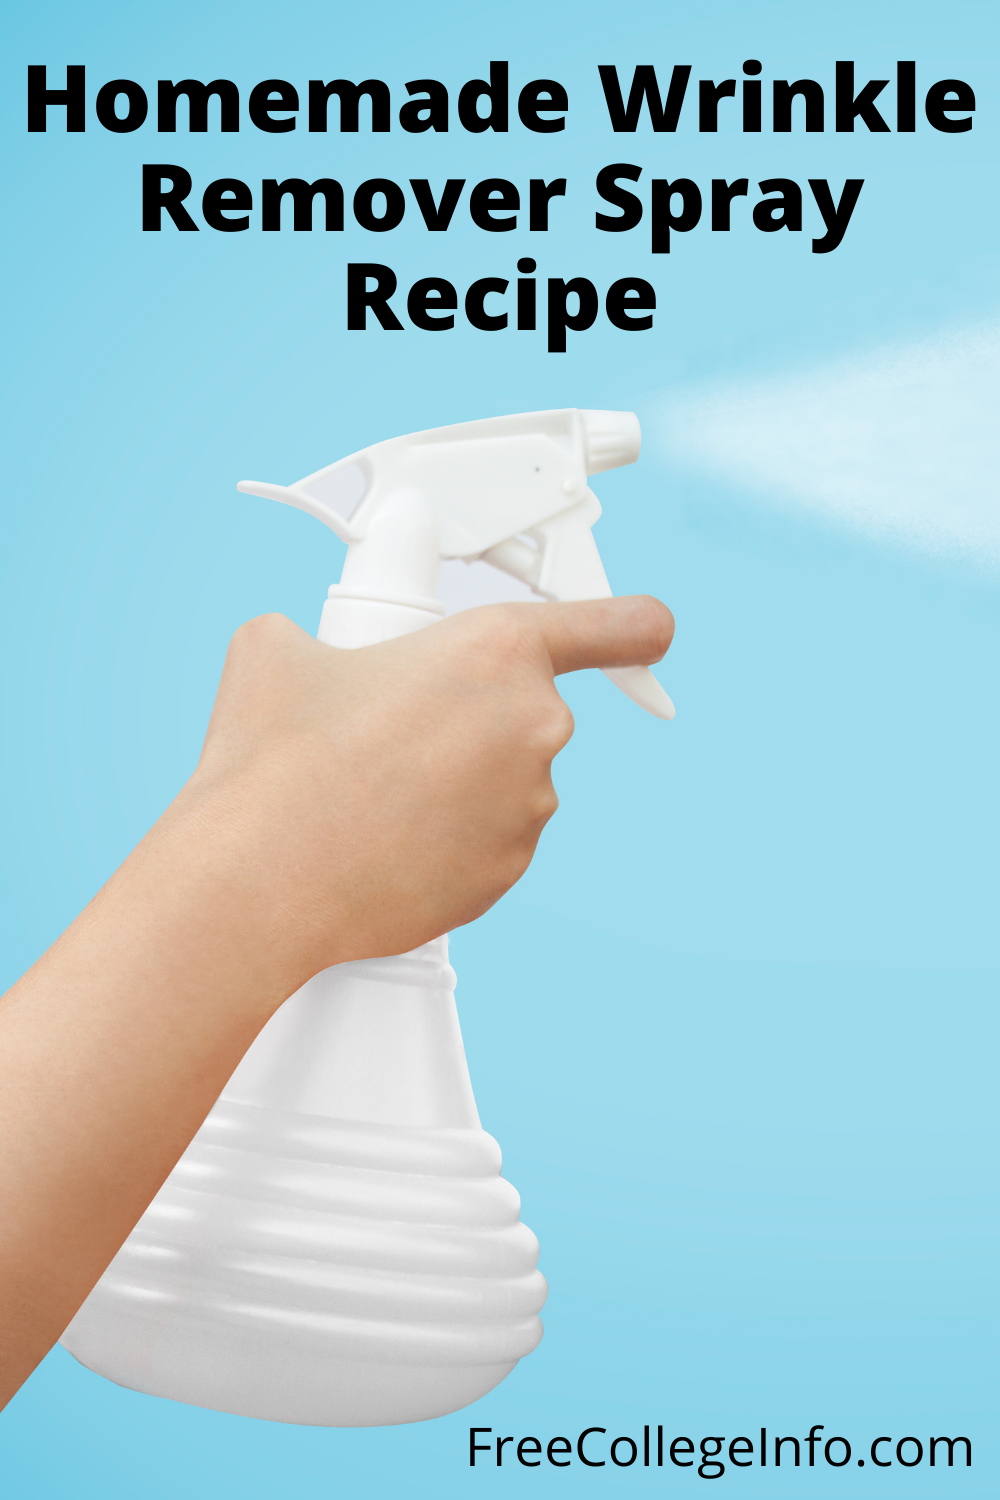 Homemade Wrinkle Remover Spray Recipe